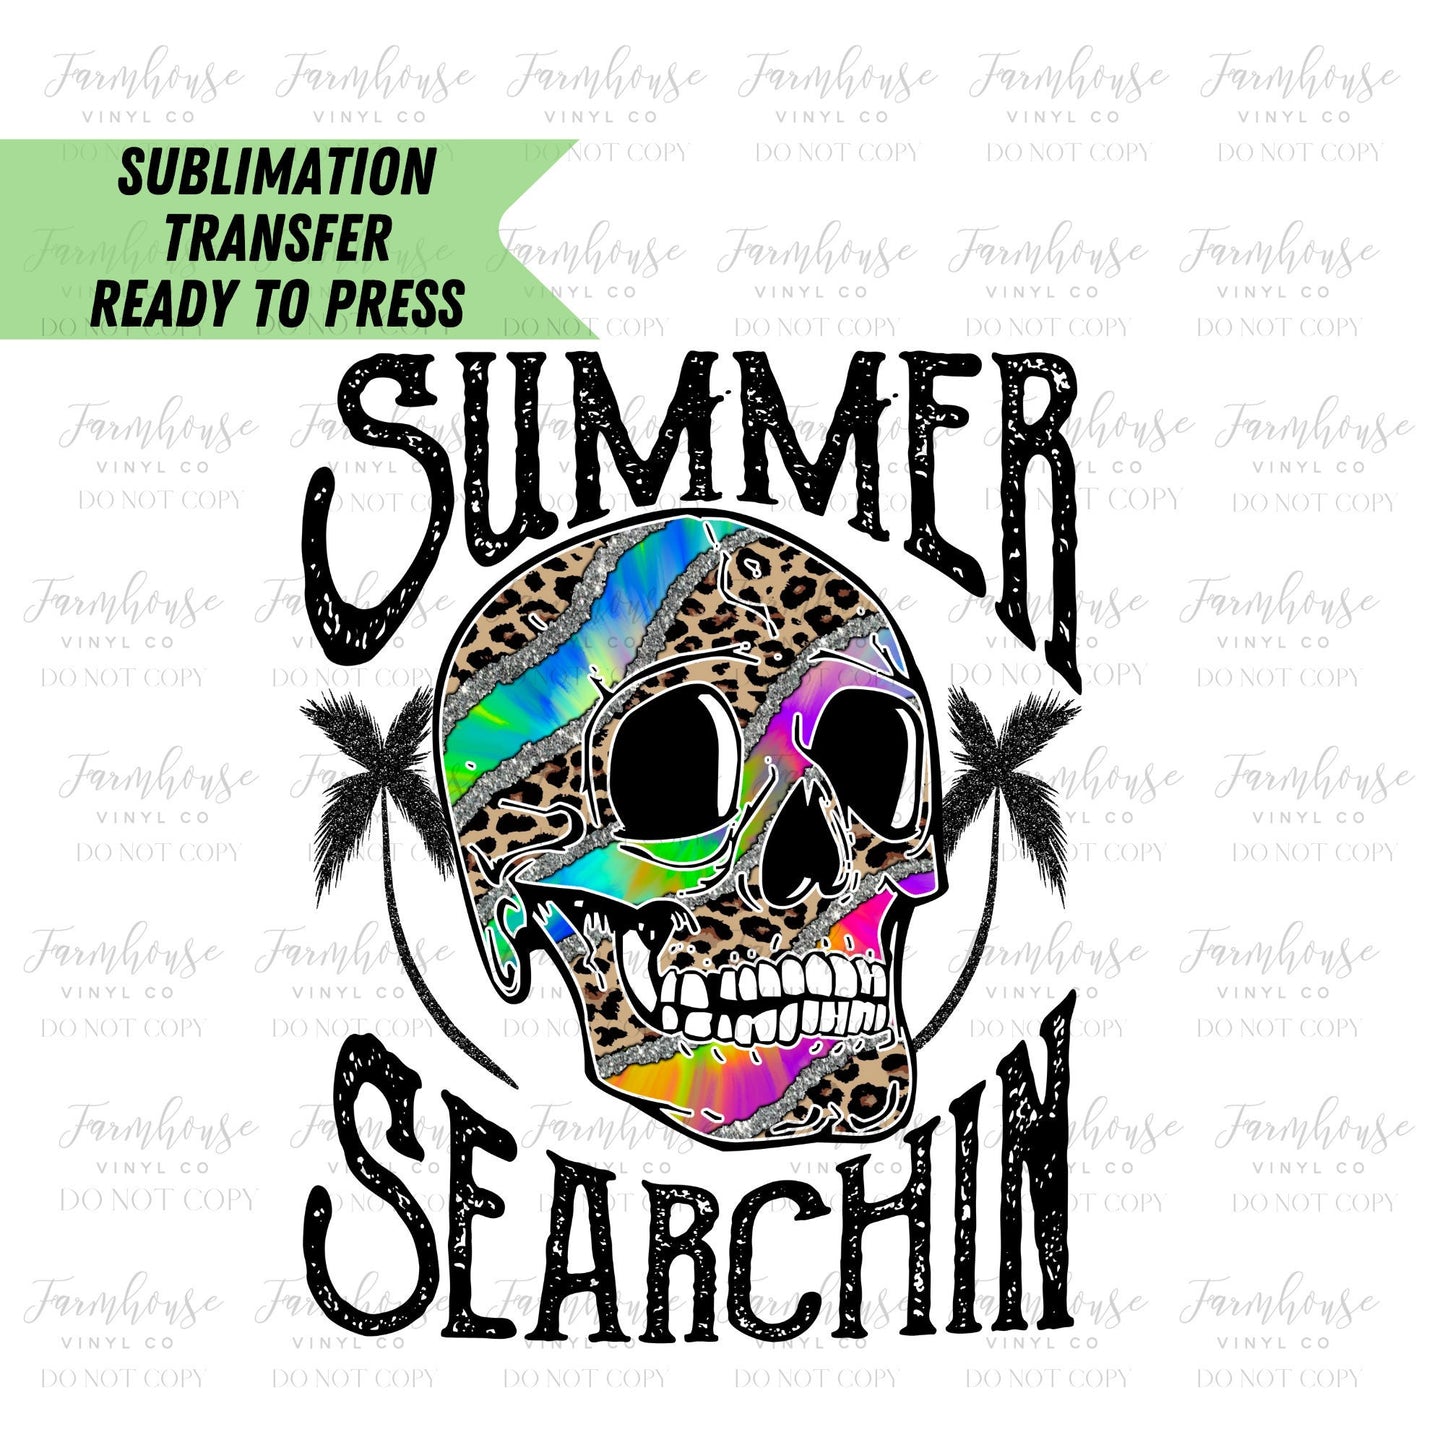 Bright Summer Searchin Skull Ready to Press Sublimation Transfer - Farmhouse Vinyl Co